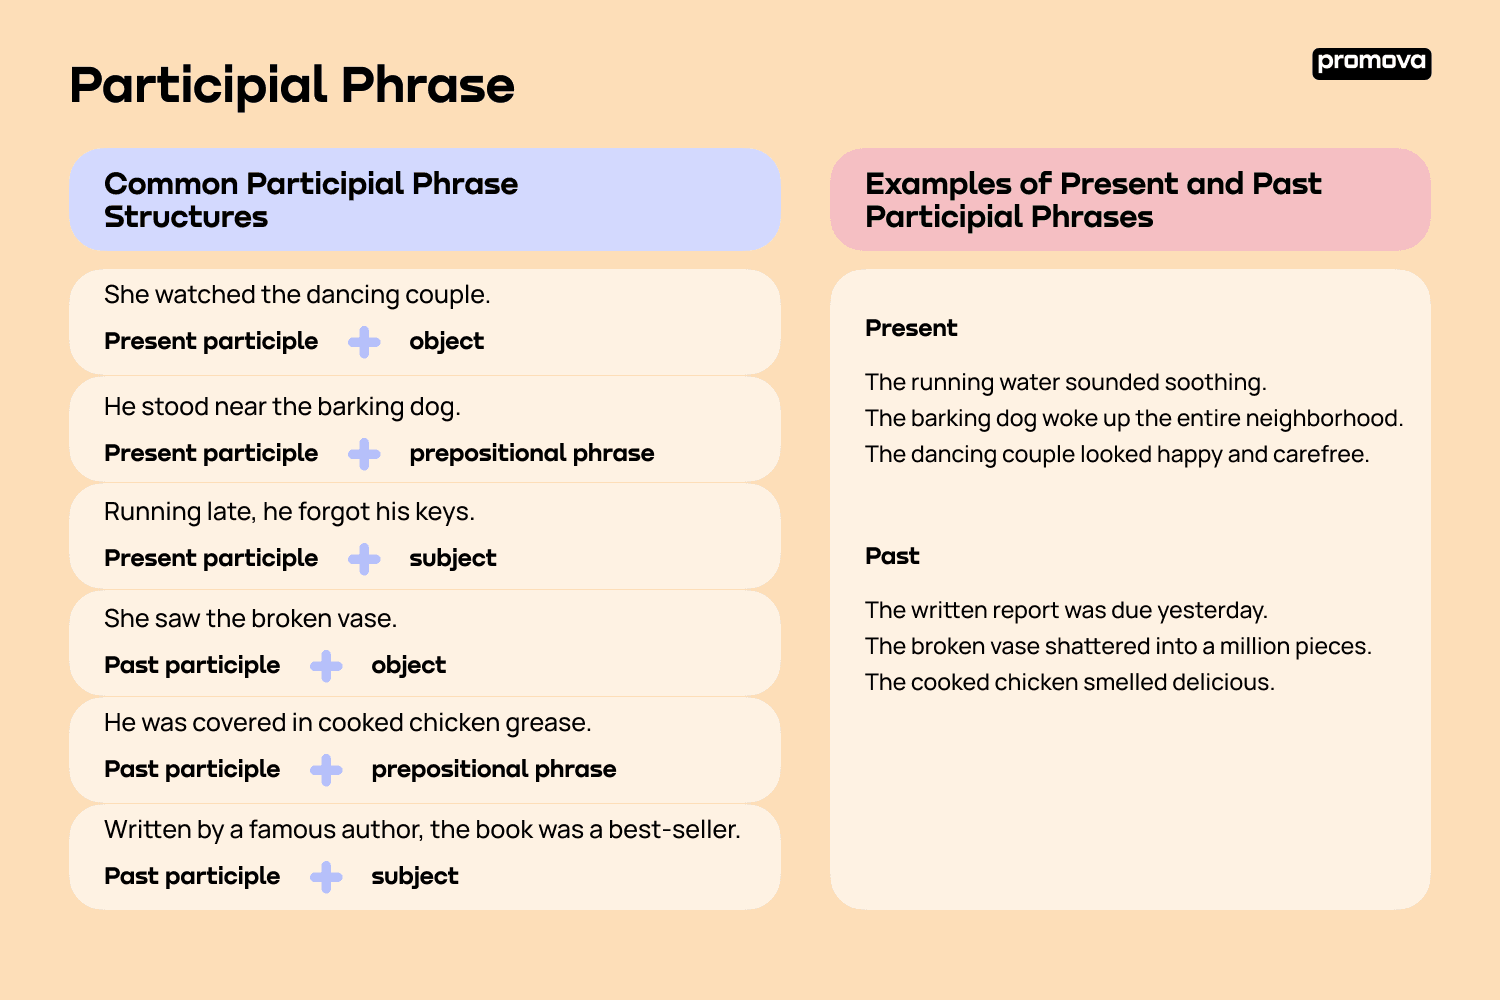 Common Participial Phrase Structures